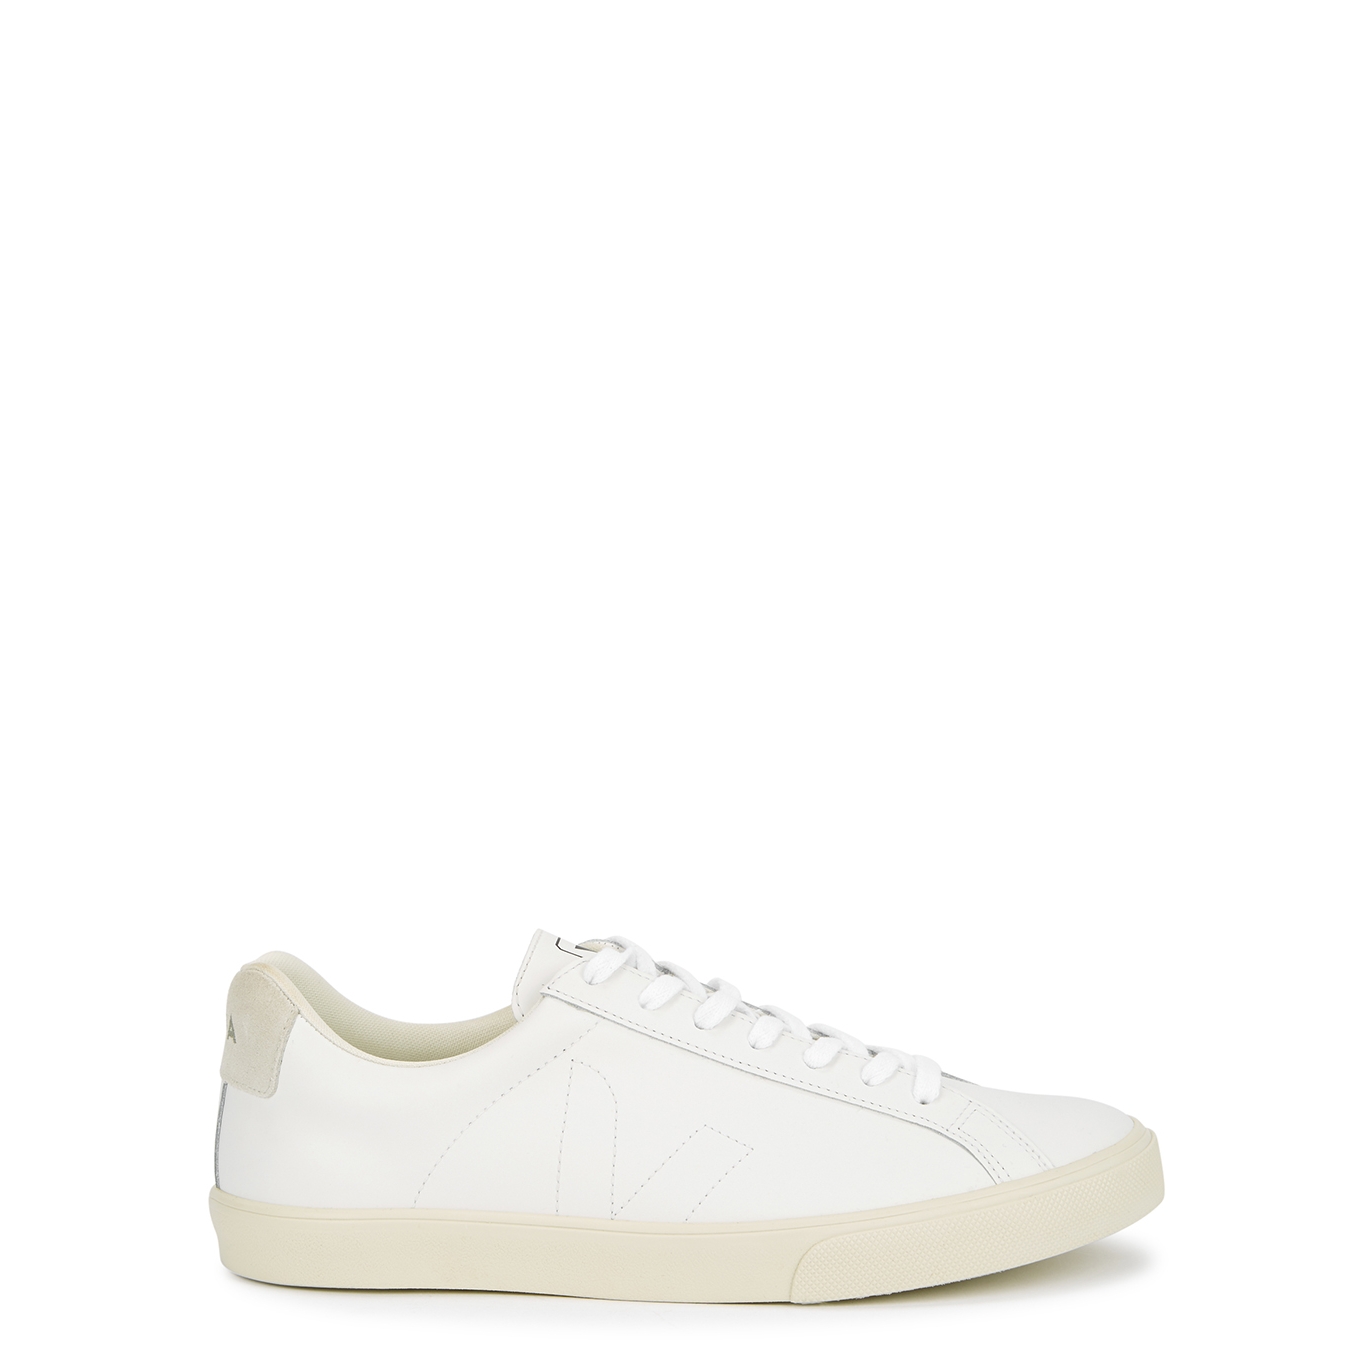 Veja Esplar white leather sneakers - Harvey Nichols